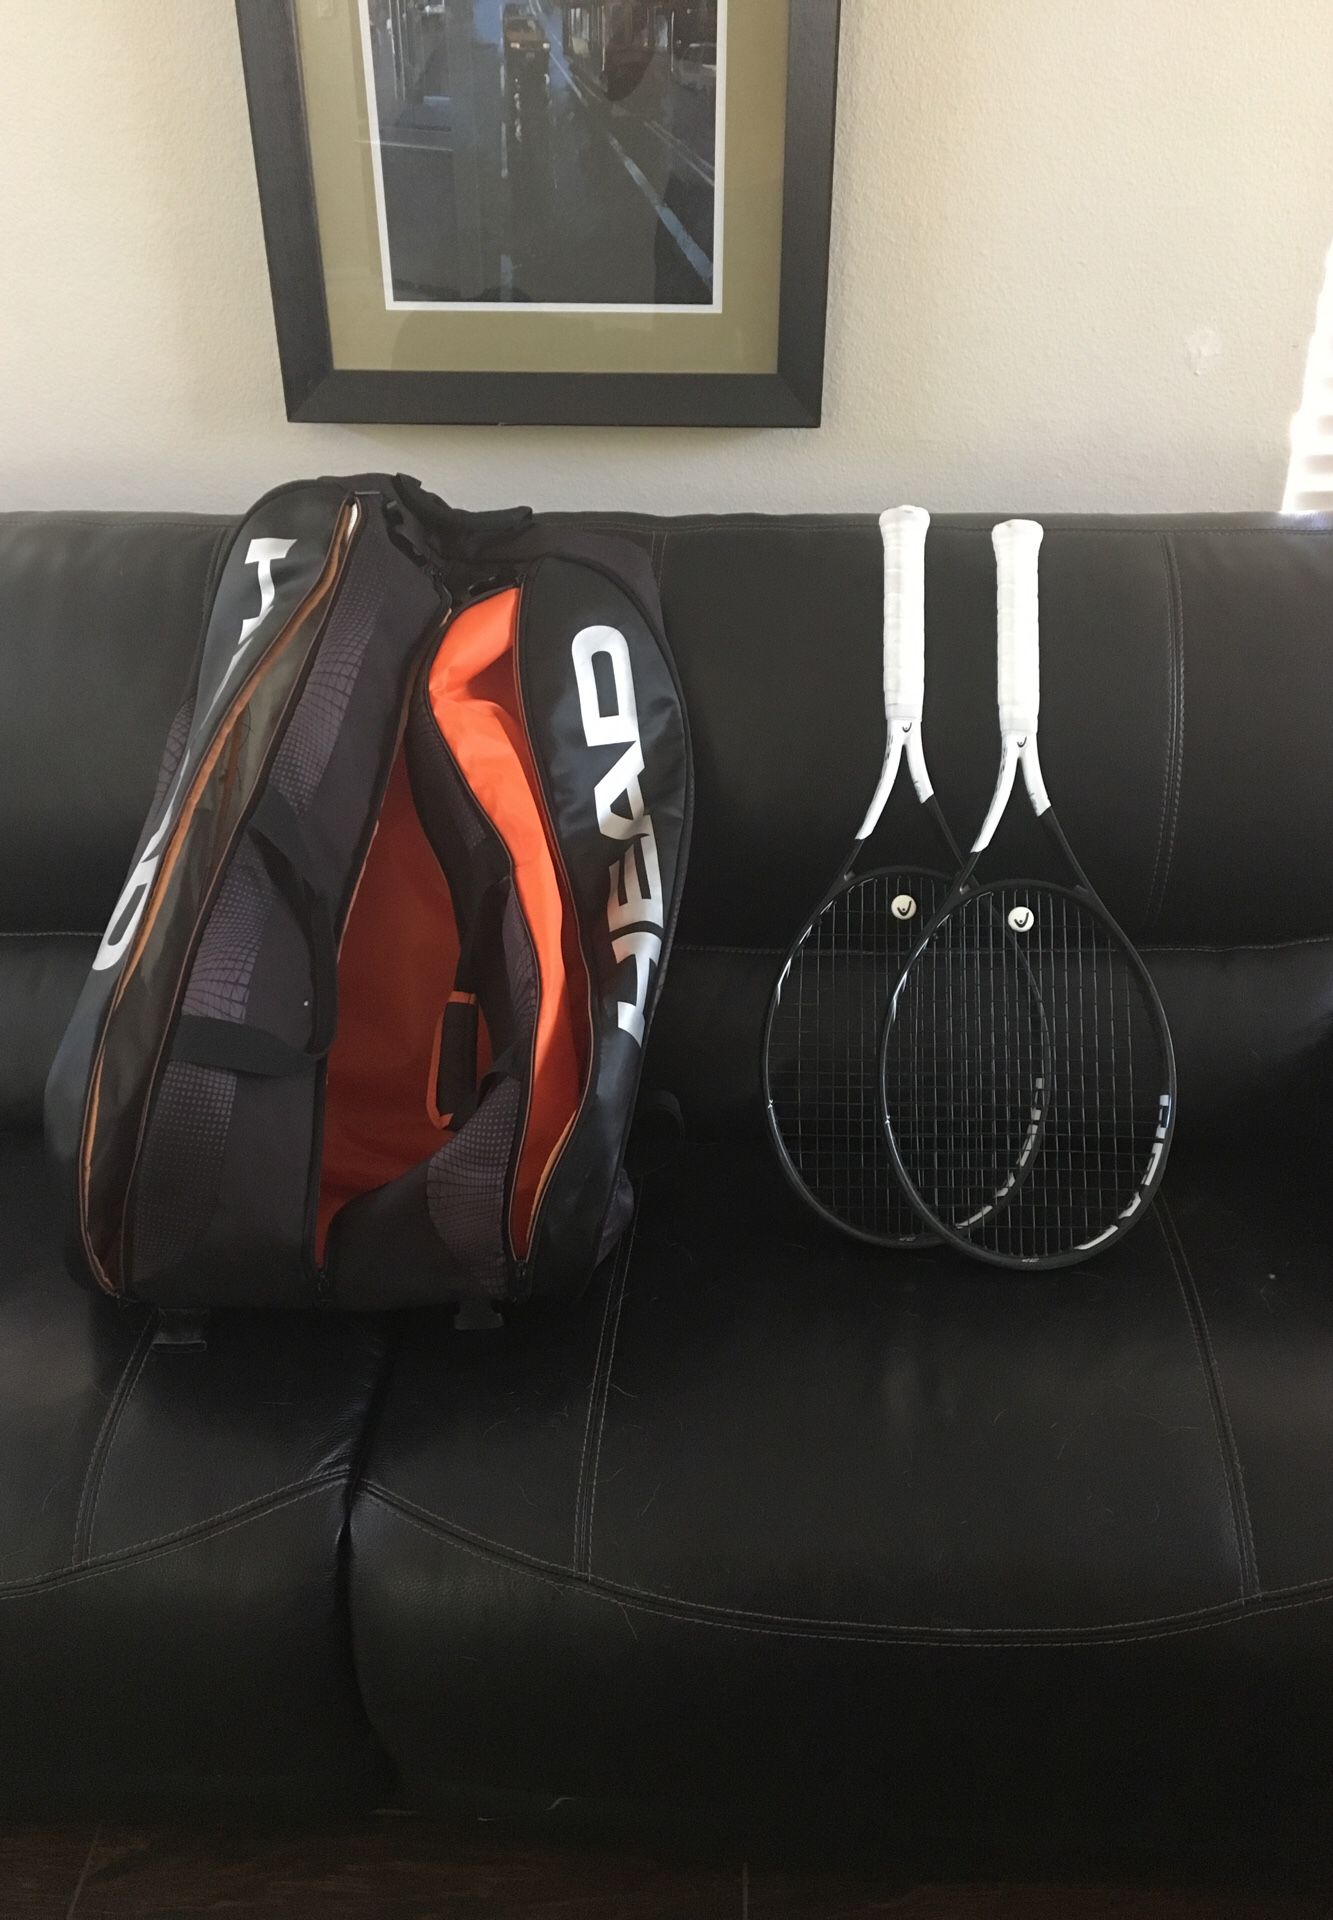 Rackets head with a new bag head 2019